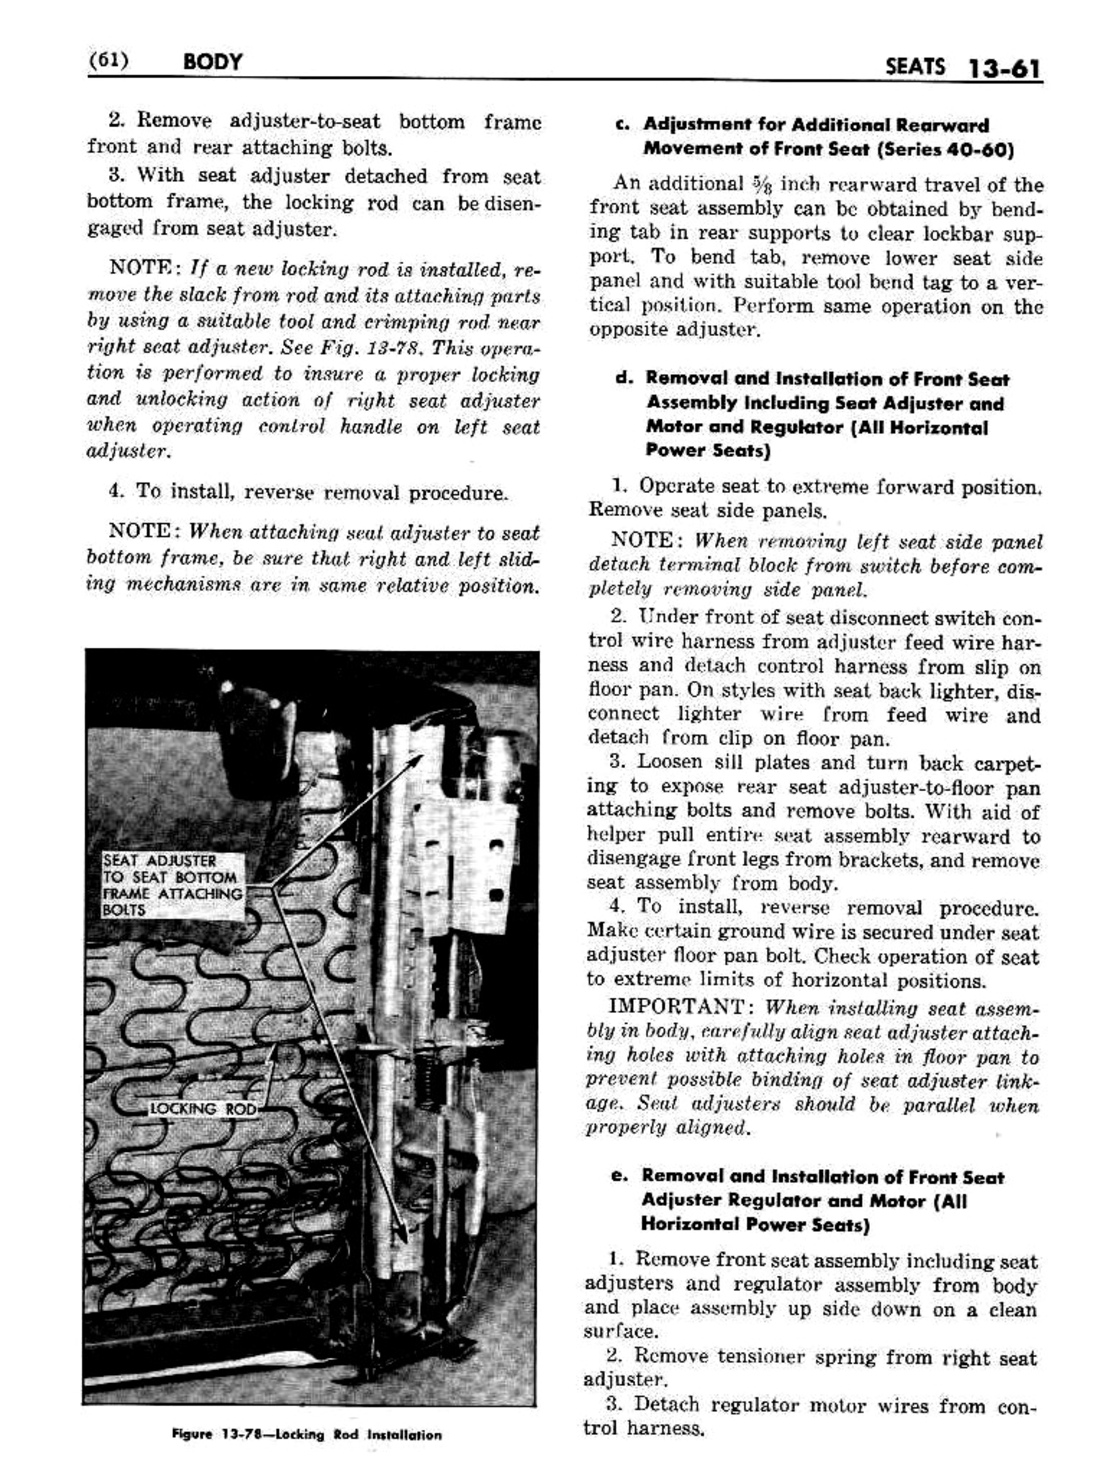 n_1958 Buick Body Service Manual-062-062.jpg